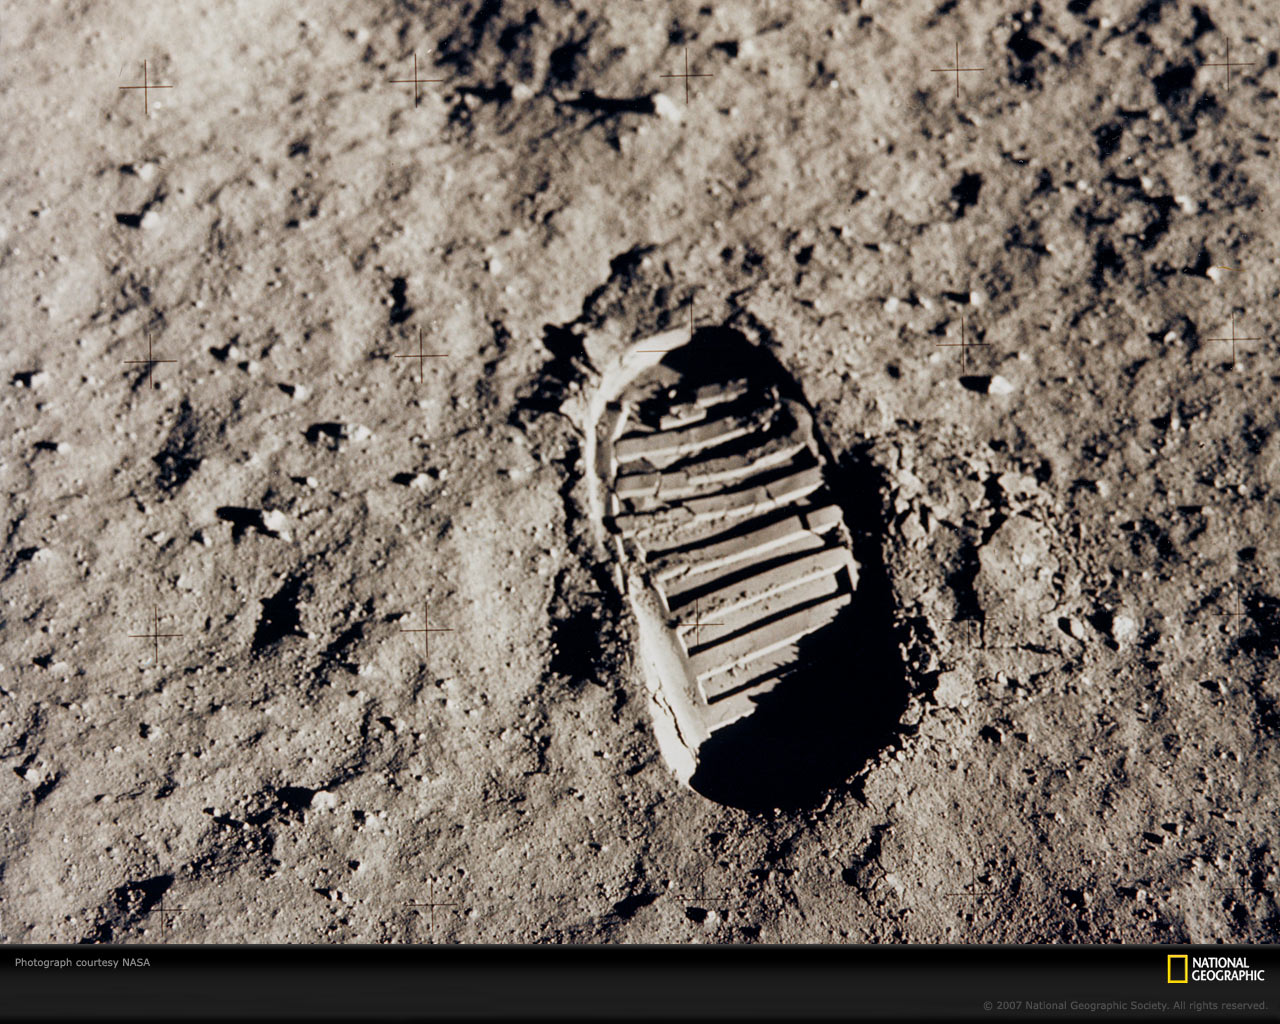 moon-footprint-GPN2001000014-xl.jpg